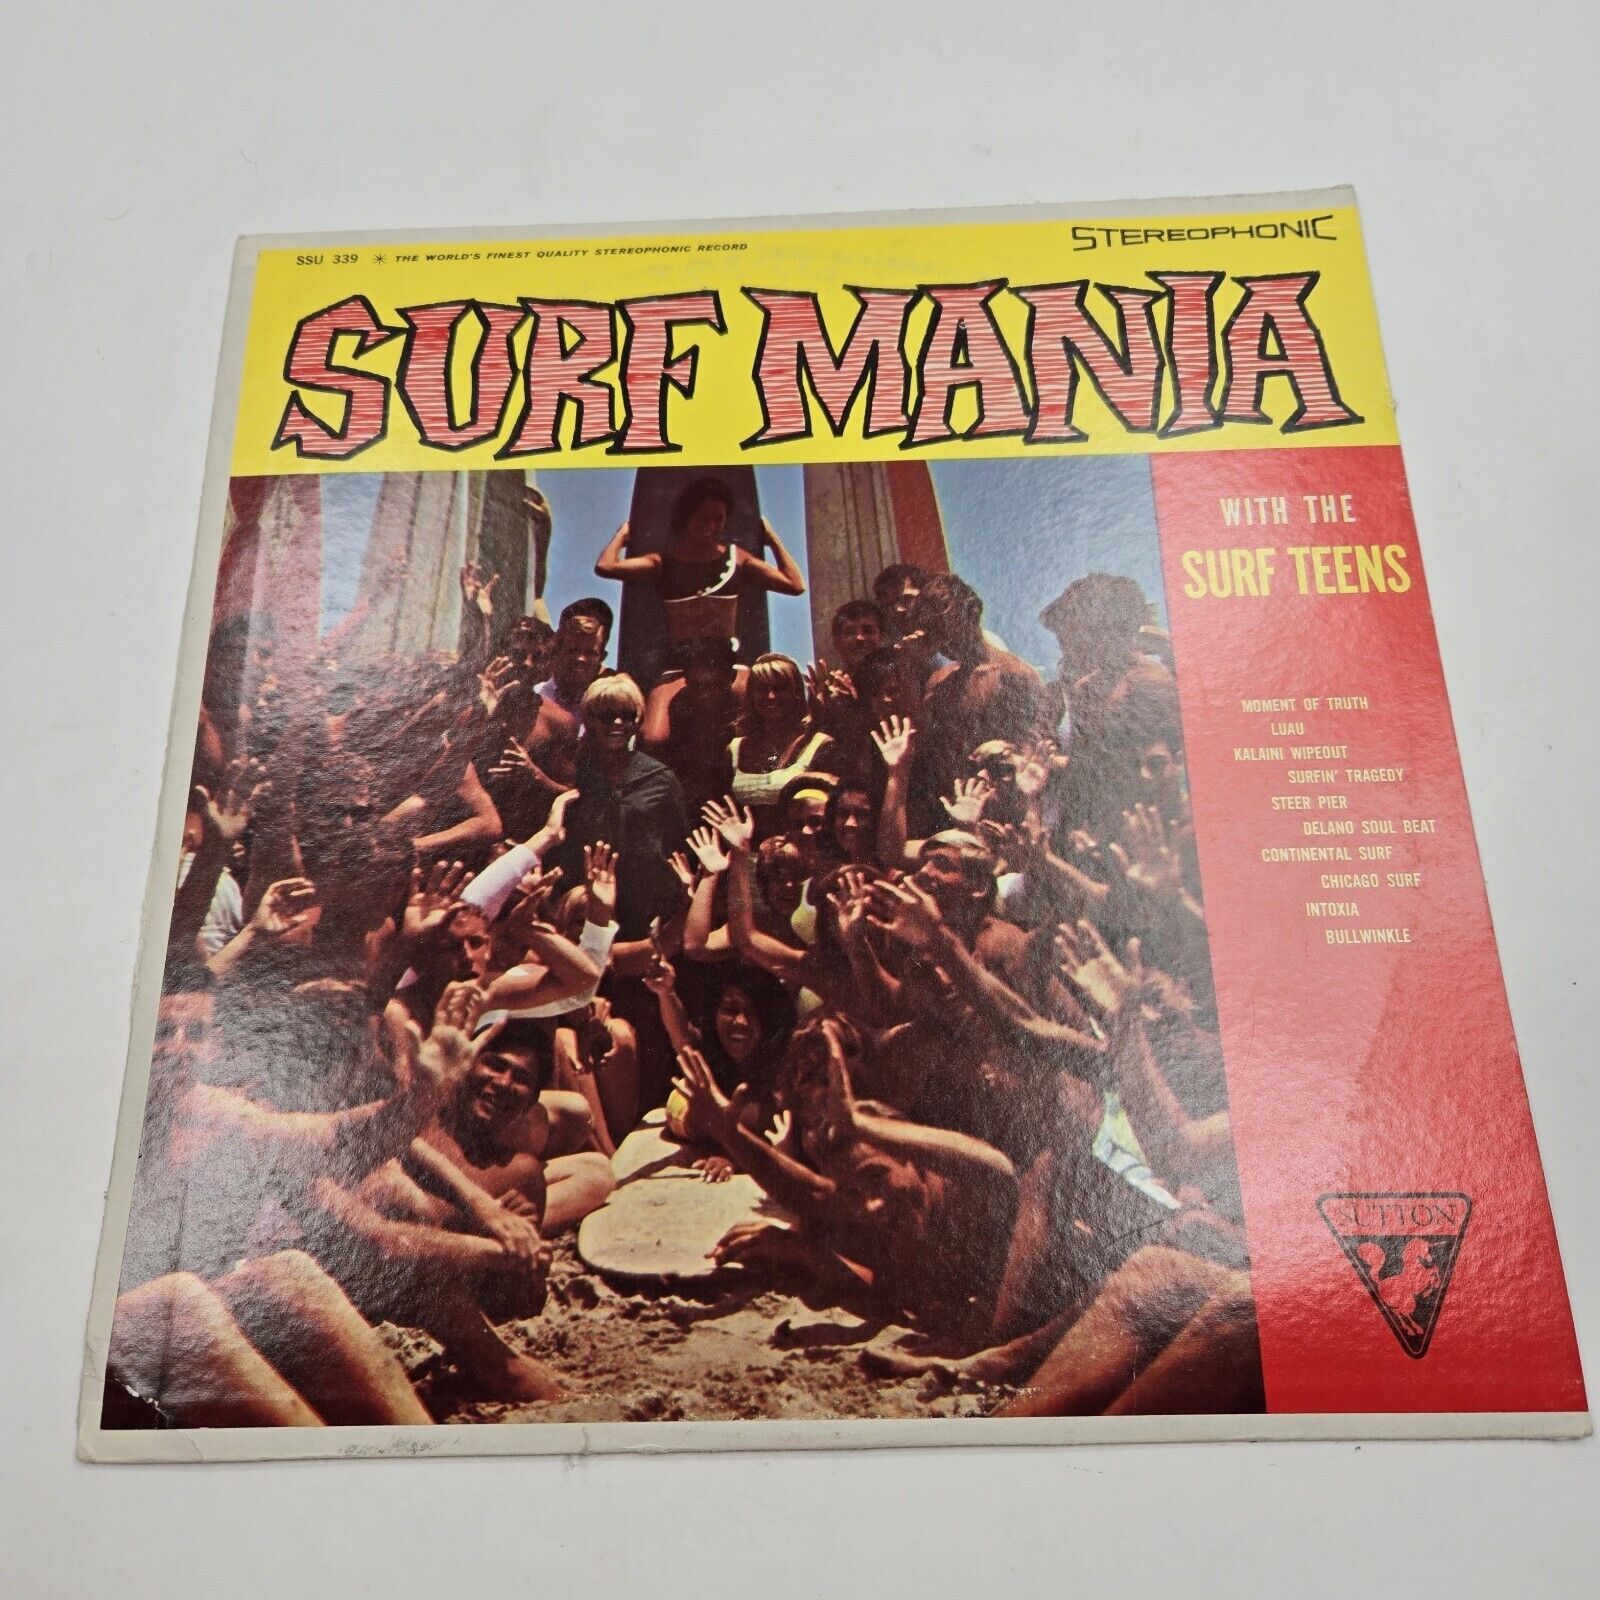 The Surf Teens Lp Surf Mania On Sutton - Stereo SSU 339 RARE